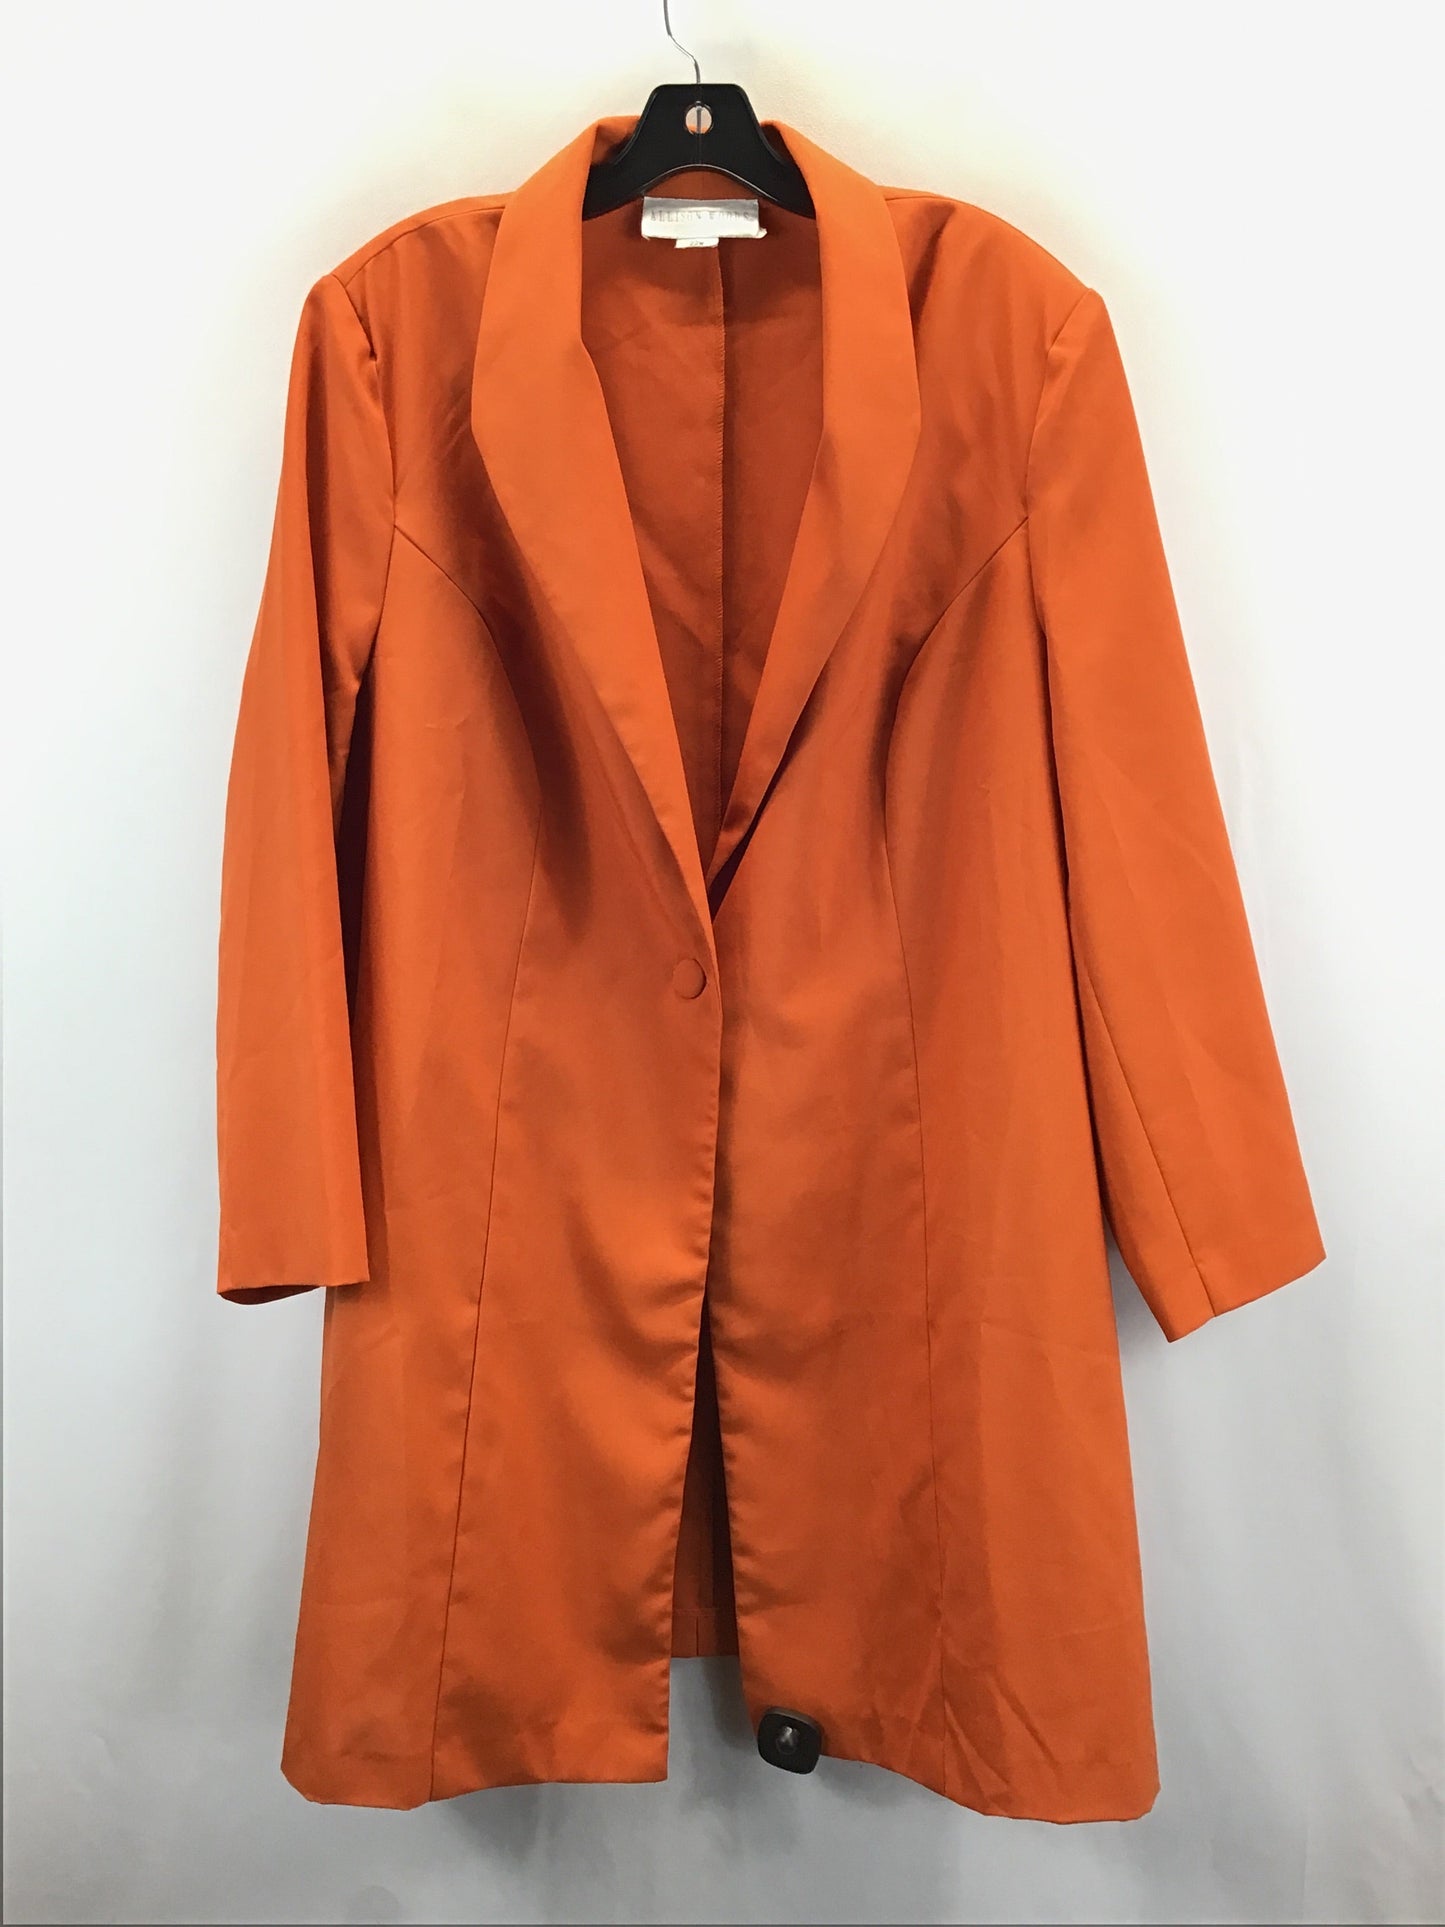 Orange Blazer Clothes Mentor, Size 22